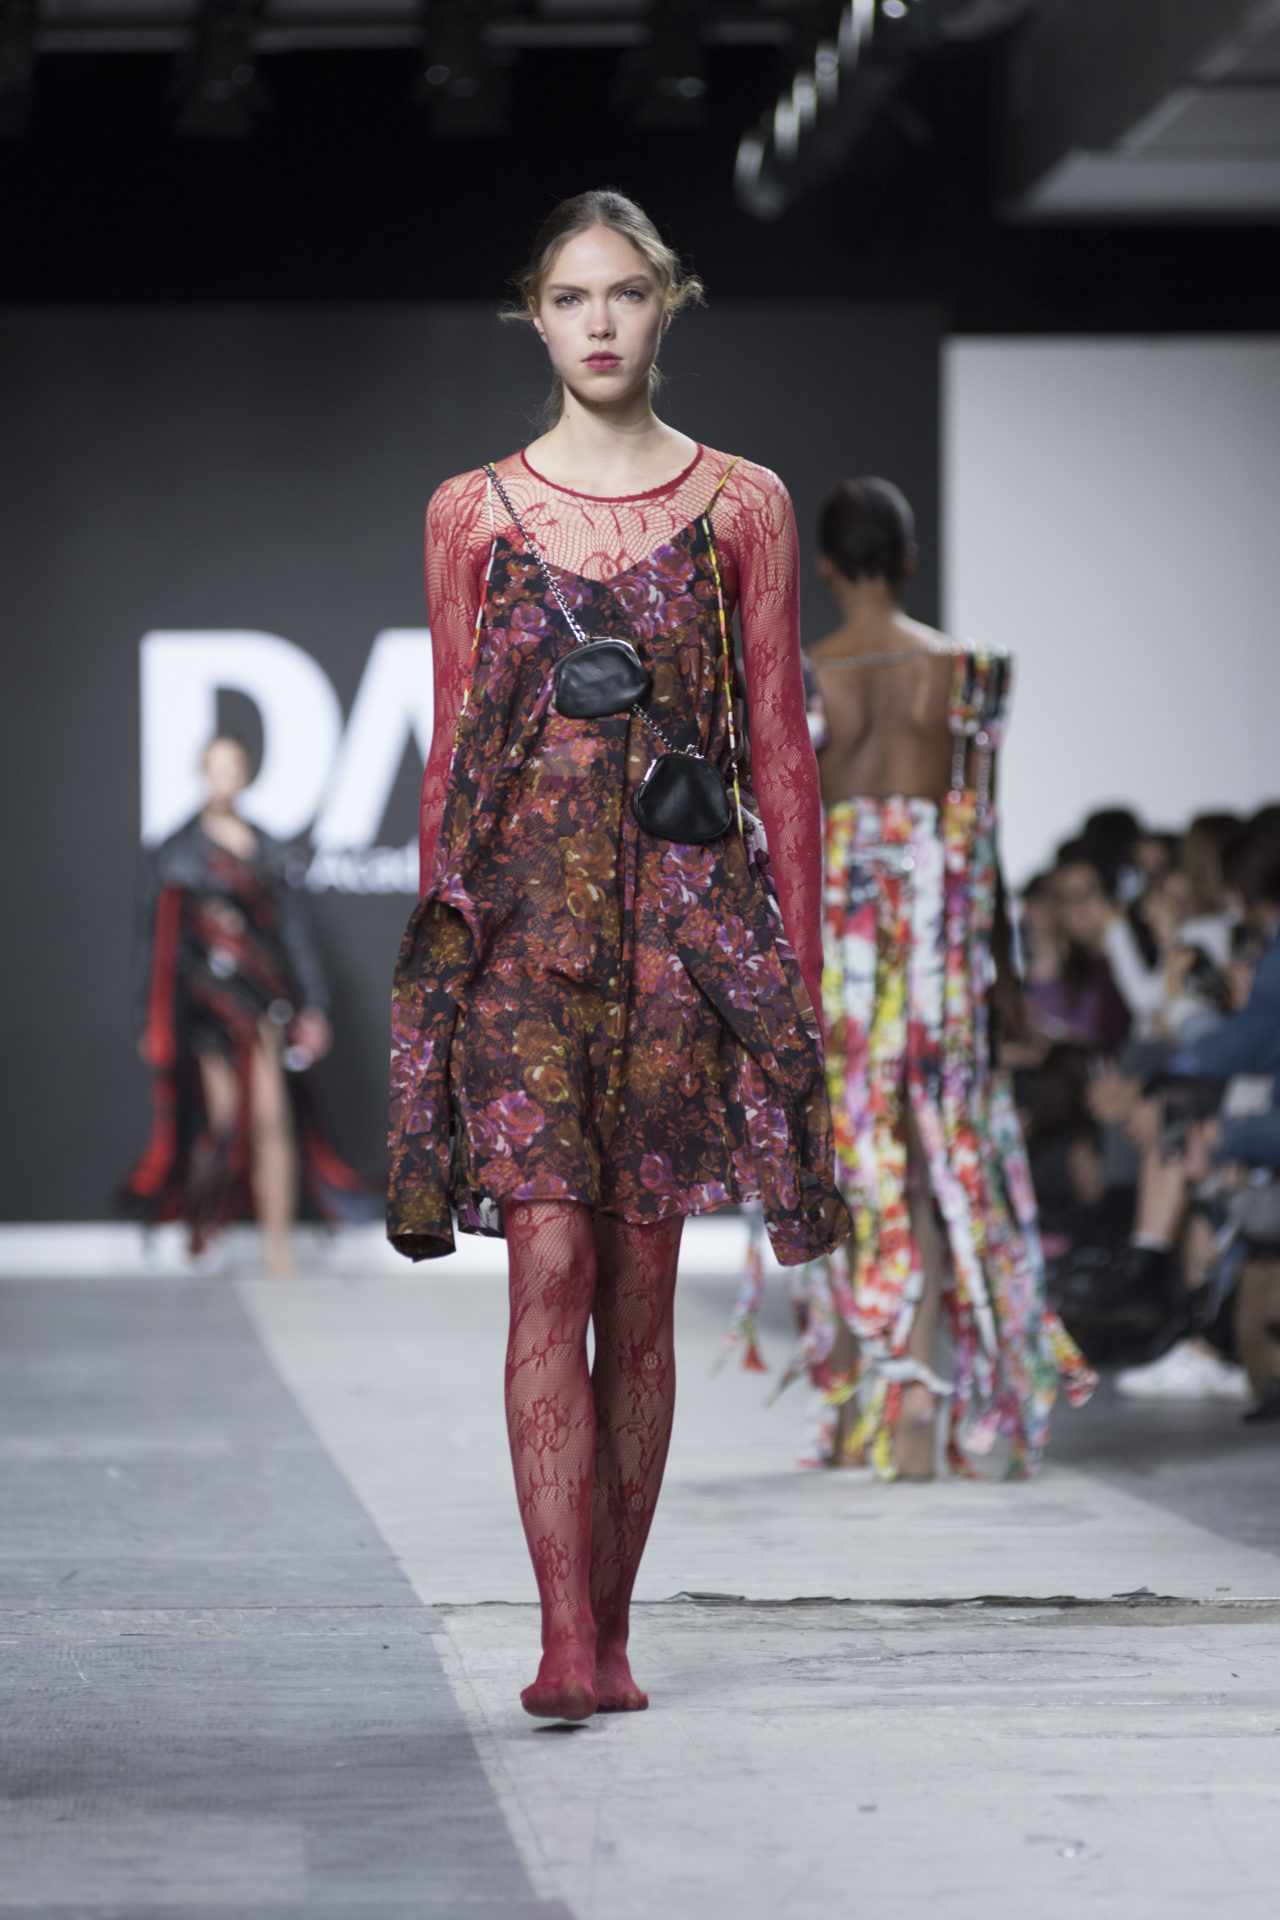 Fashion Designer: Tritti tarkulwaranont - Fashion Graduate Italia Fashion Show - Domus Academy